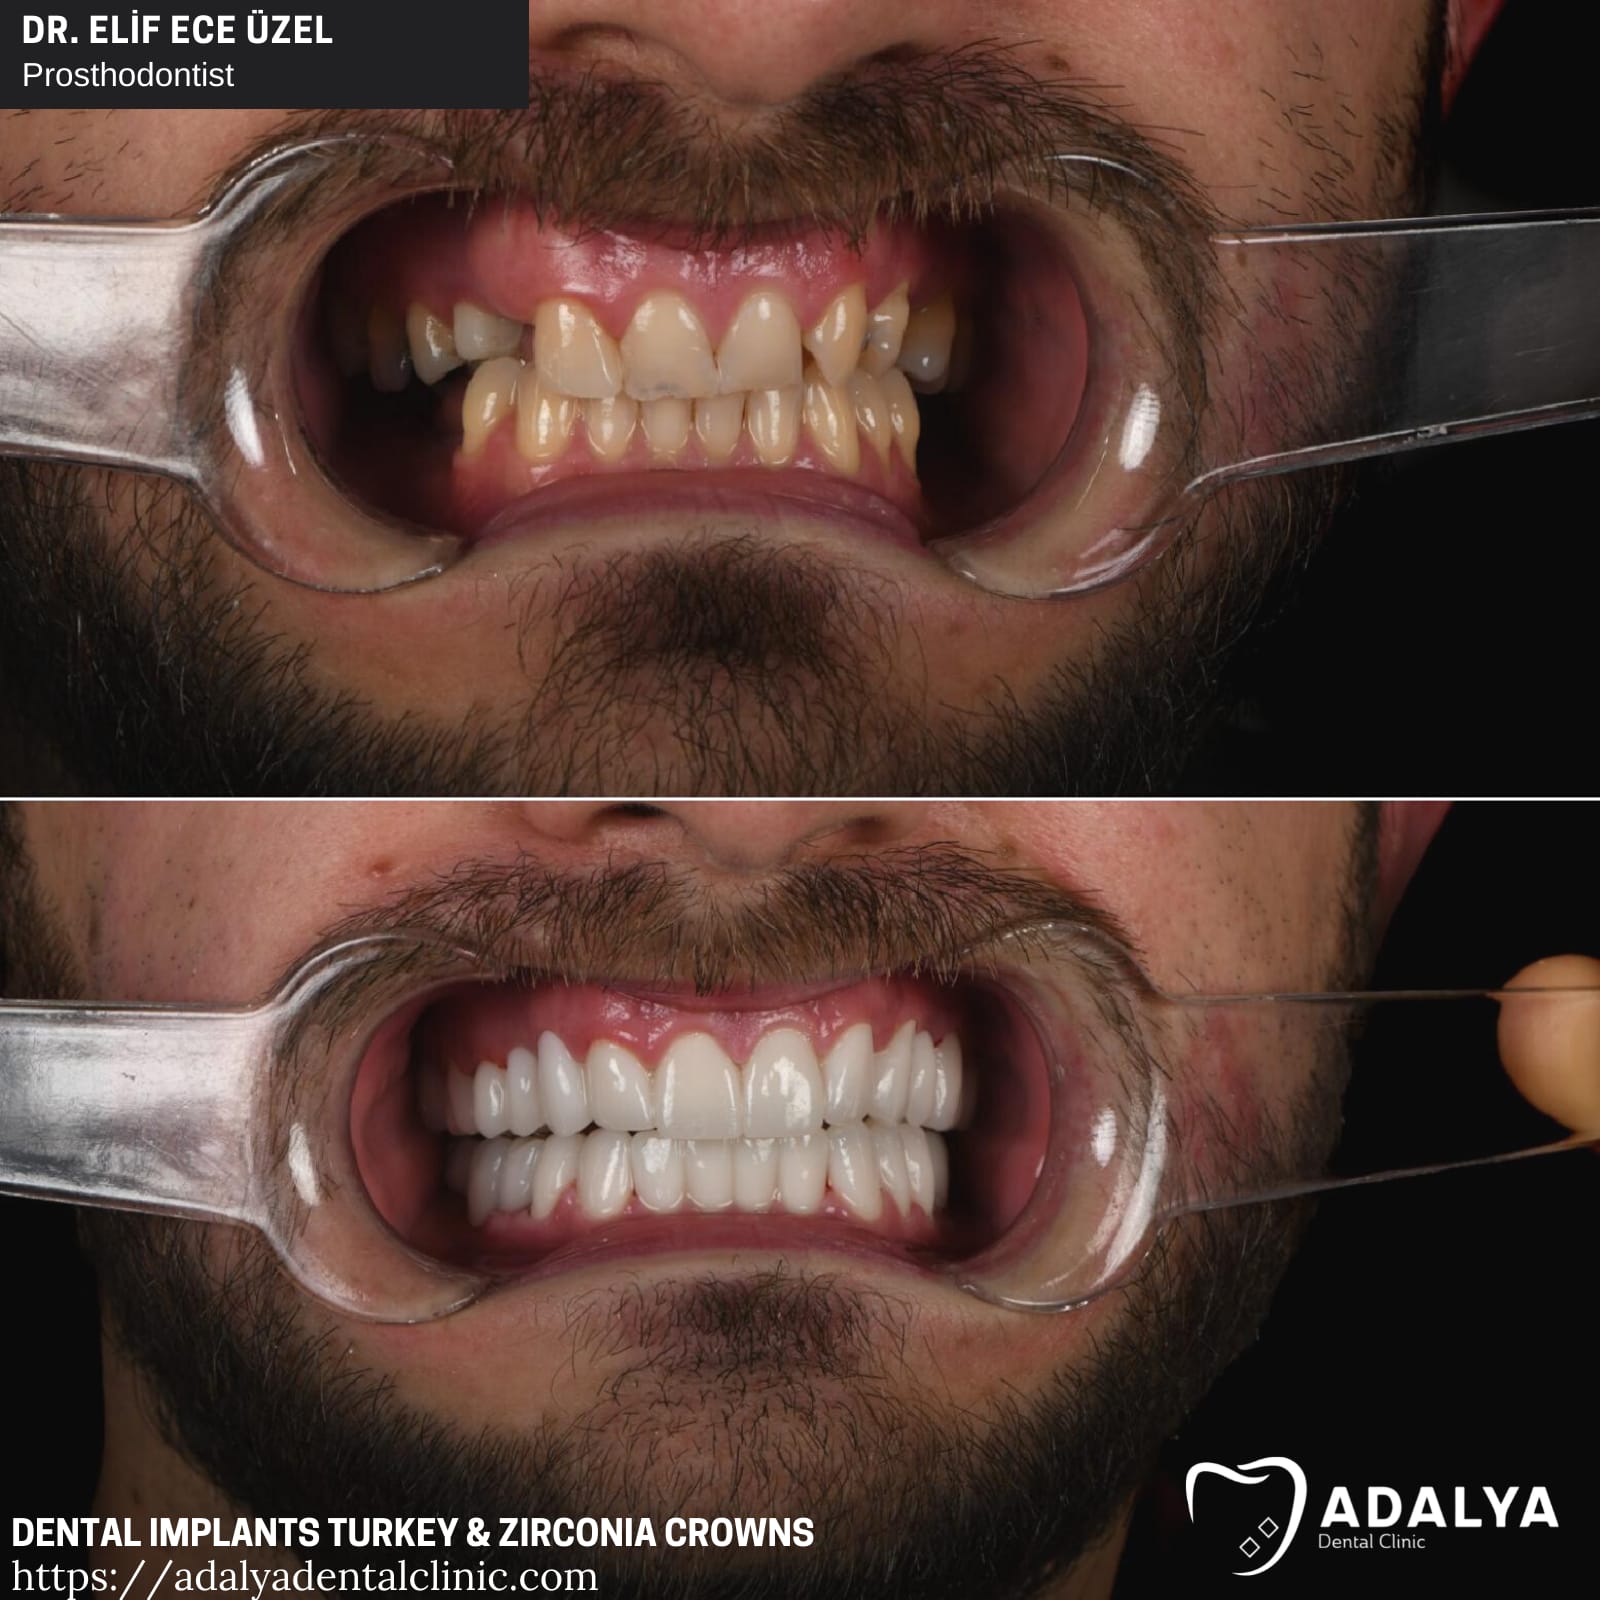 adalya dental implants turkey zirconia crowns cost